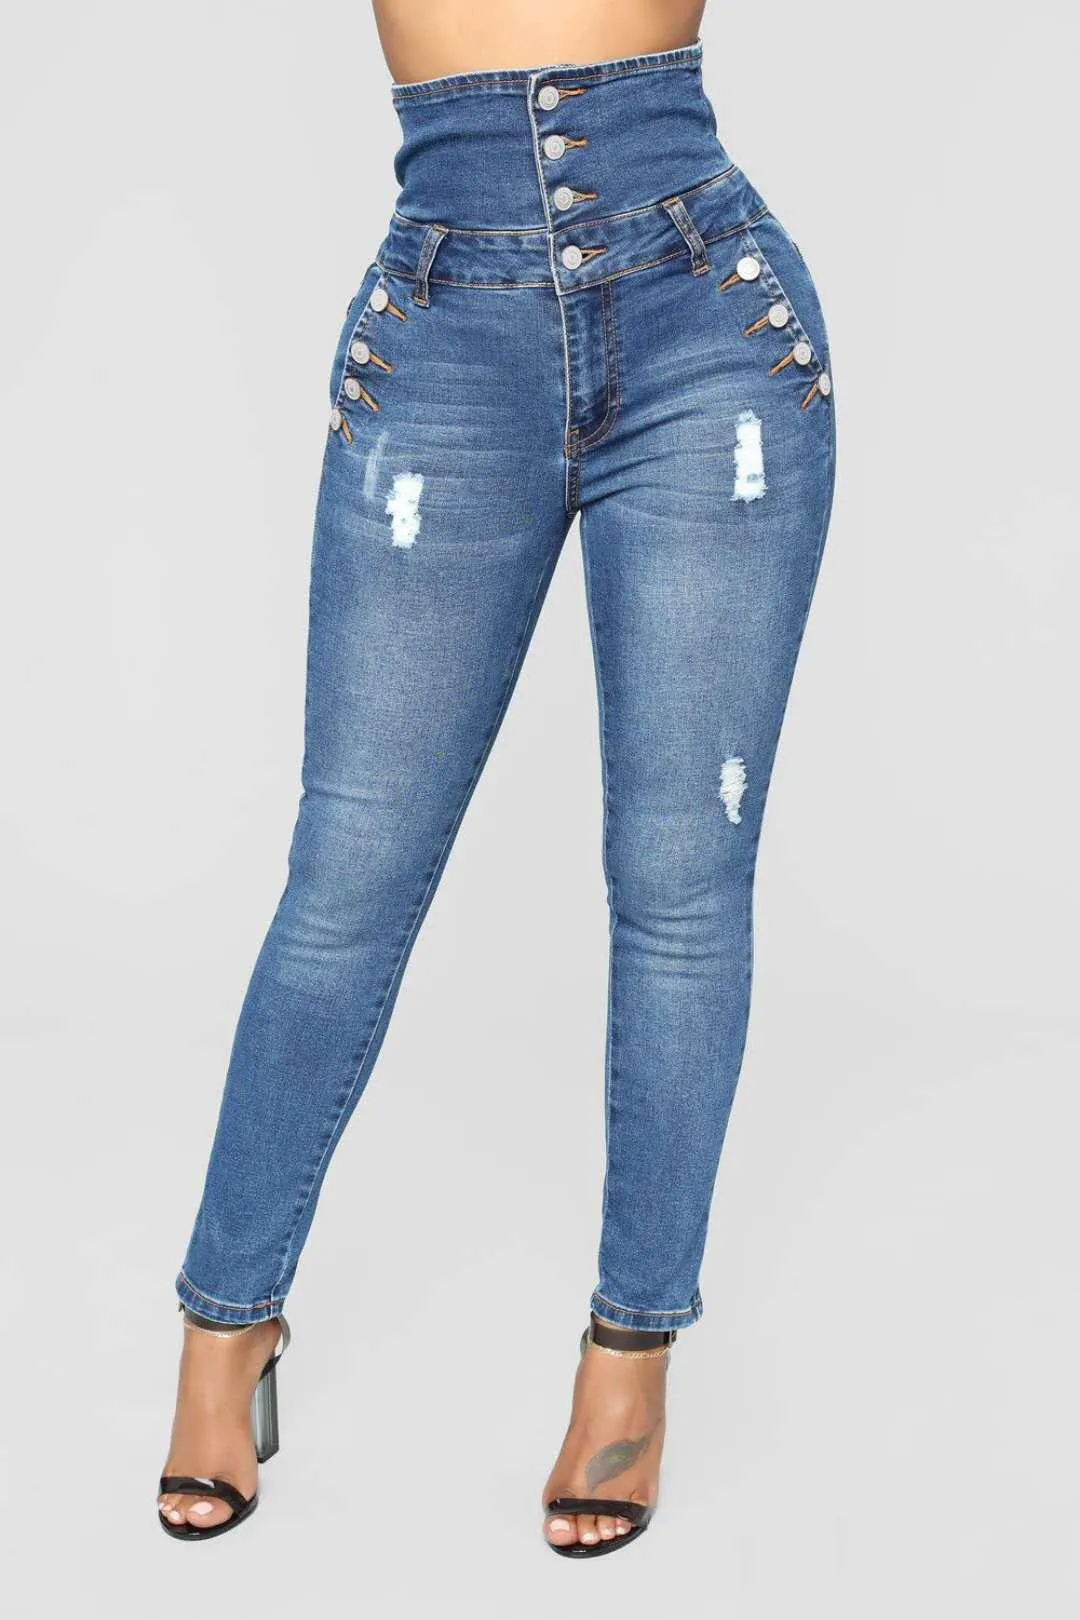 Women Ladies Jeans Washed Big Pockets Loose Denim Pants Jeans Baggy Jeans |  eBay